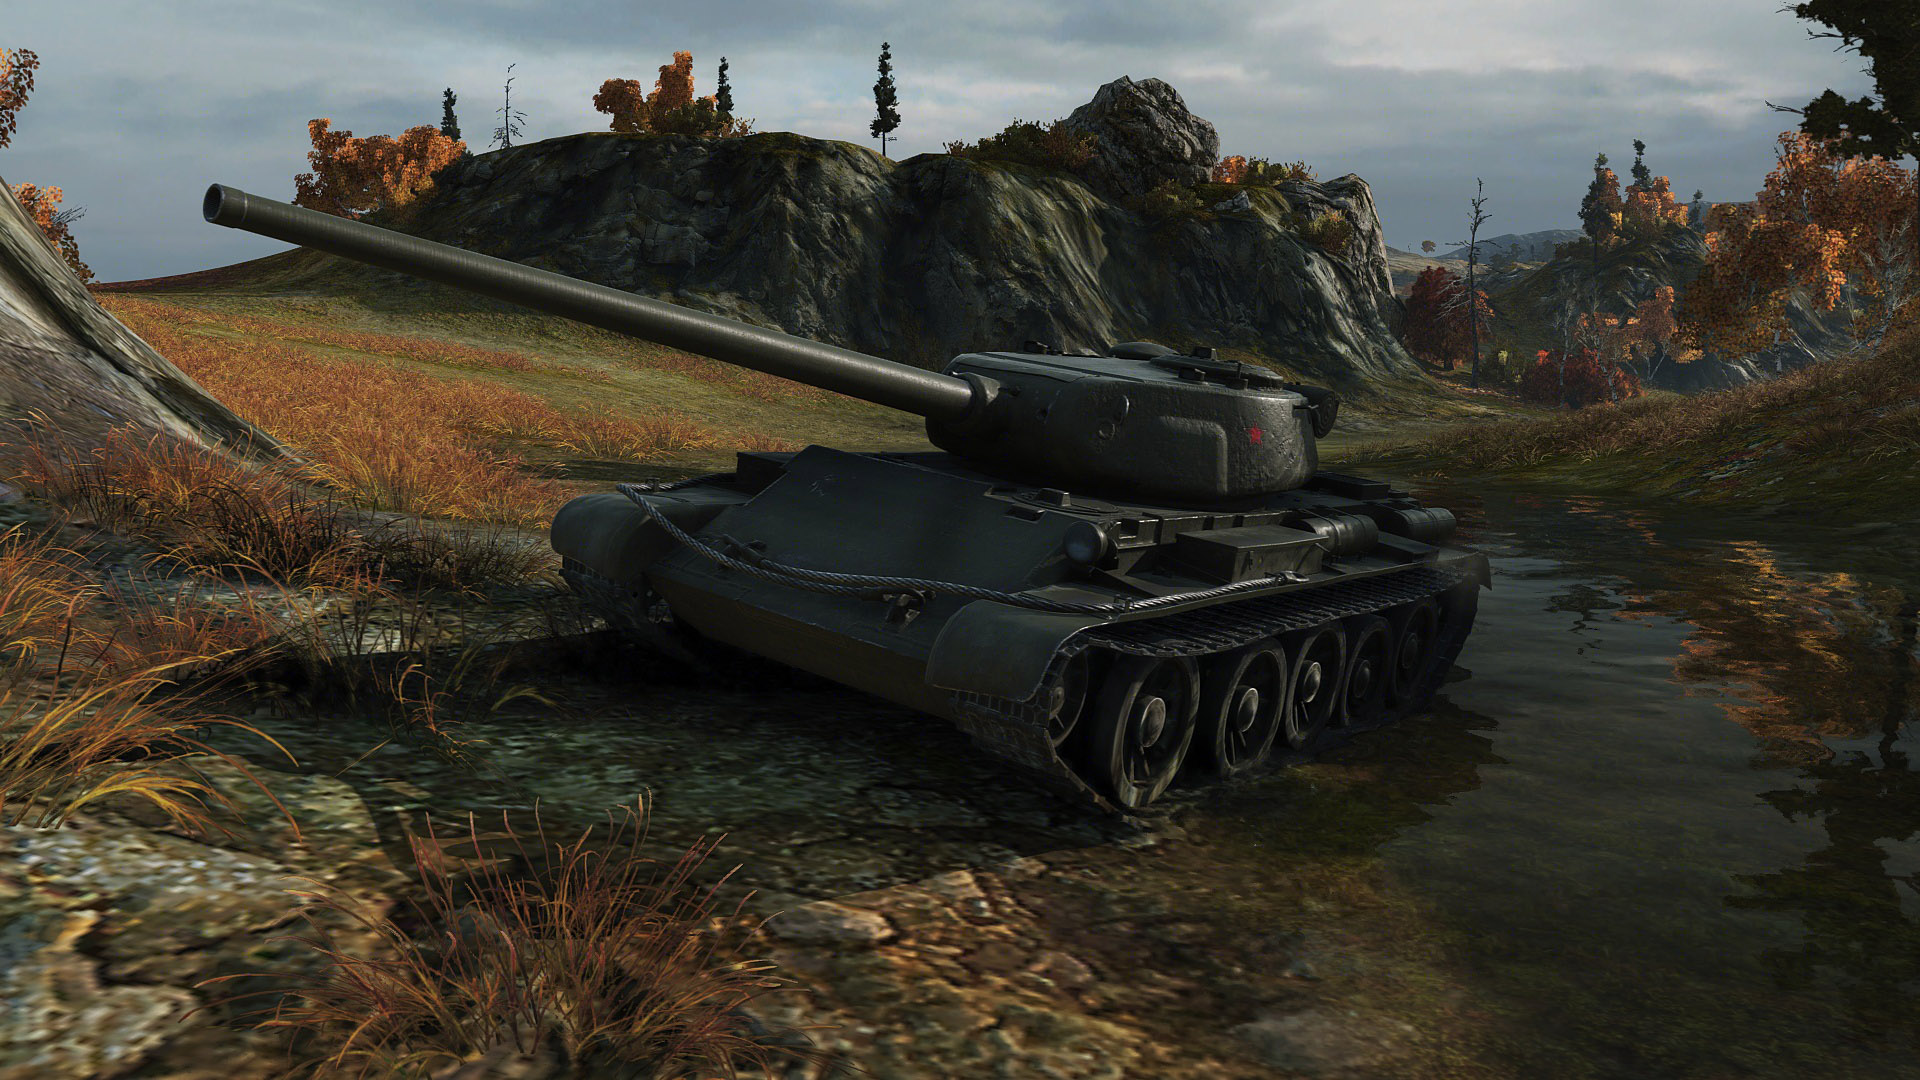 Wot 54. Т44 танк. Т54 обр 1. Т54 обр 1 WOT. Т-54 World of Tanks.